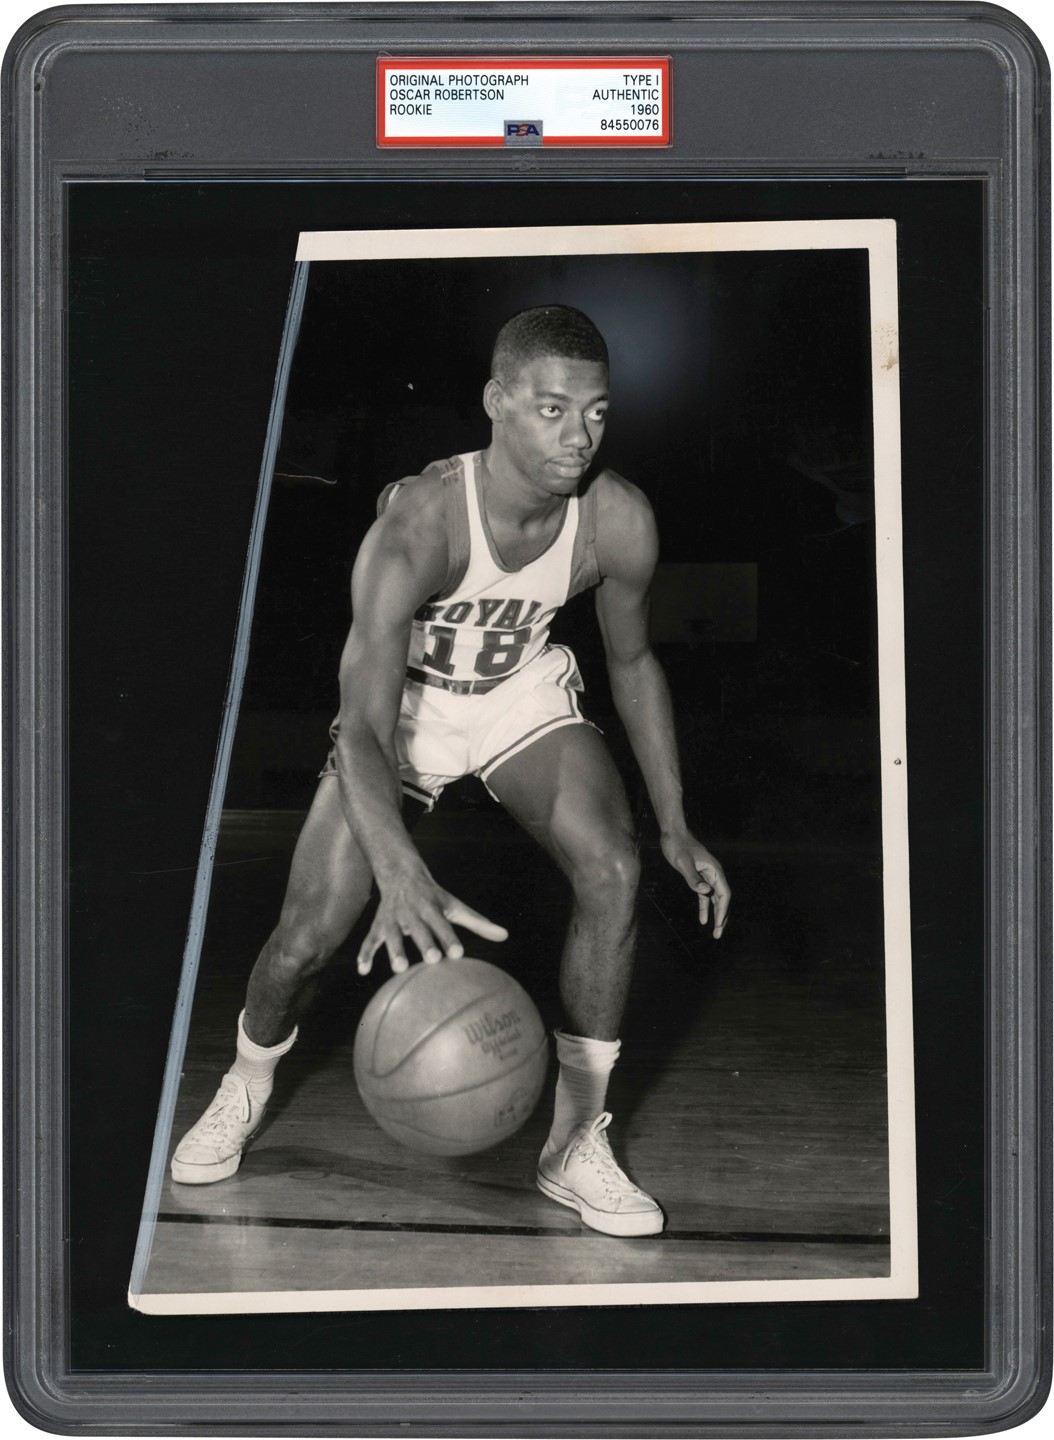 Vintage Sports Photographs - 1960 Oscar Robertson Original Photograph - Taken Prior to His 1st NBA Game (PSA Type I)